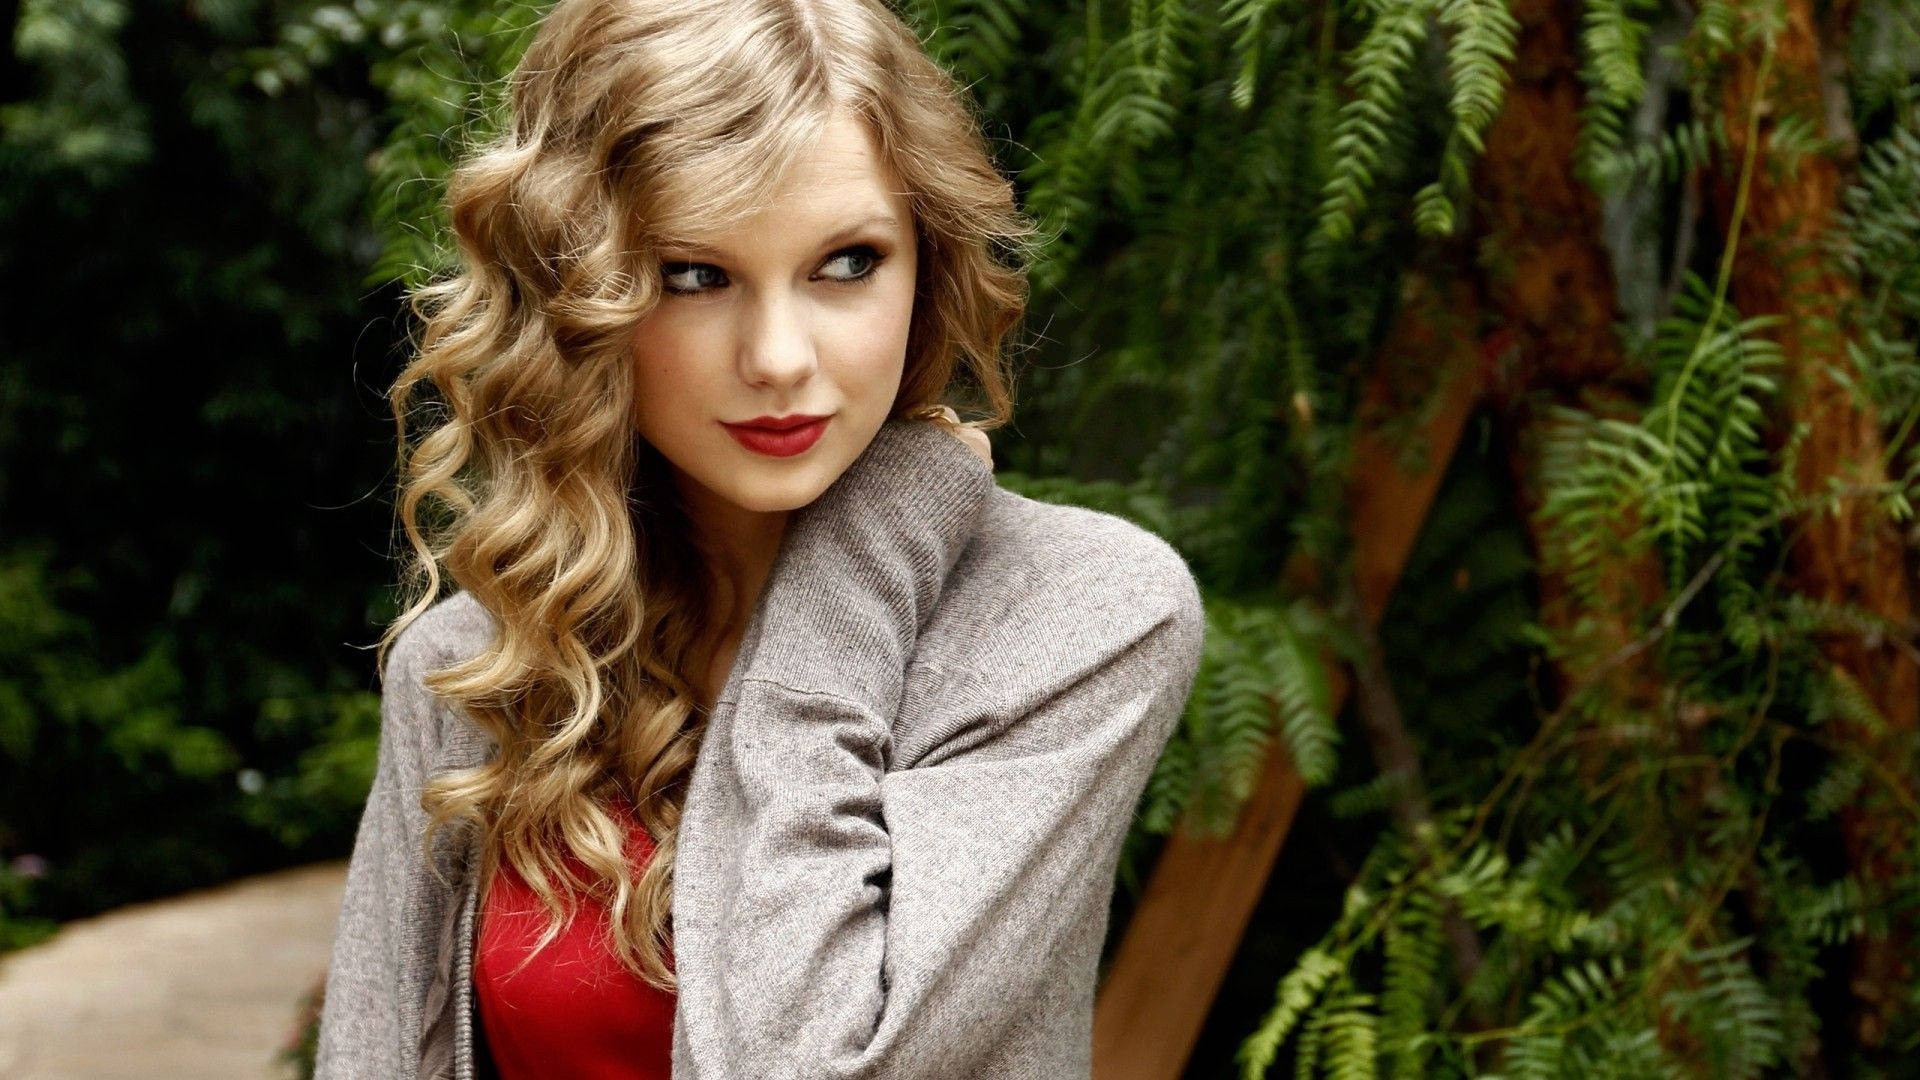 Side-glance Pose Taylor Swift